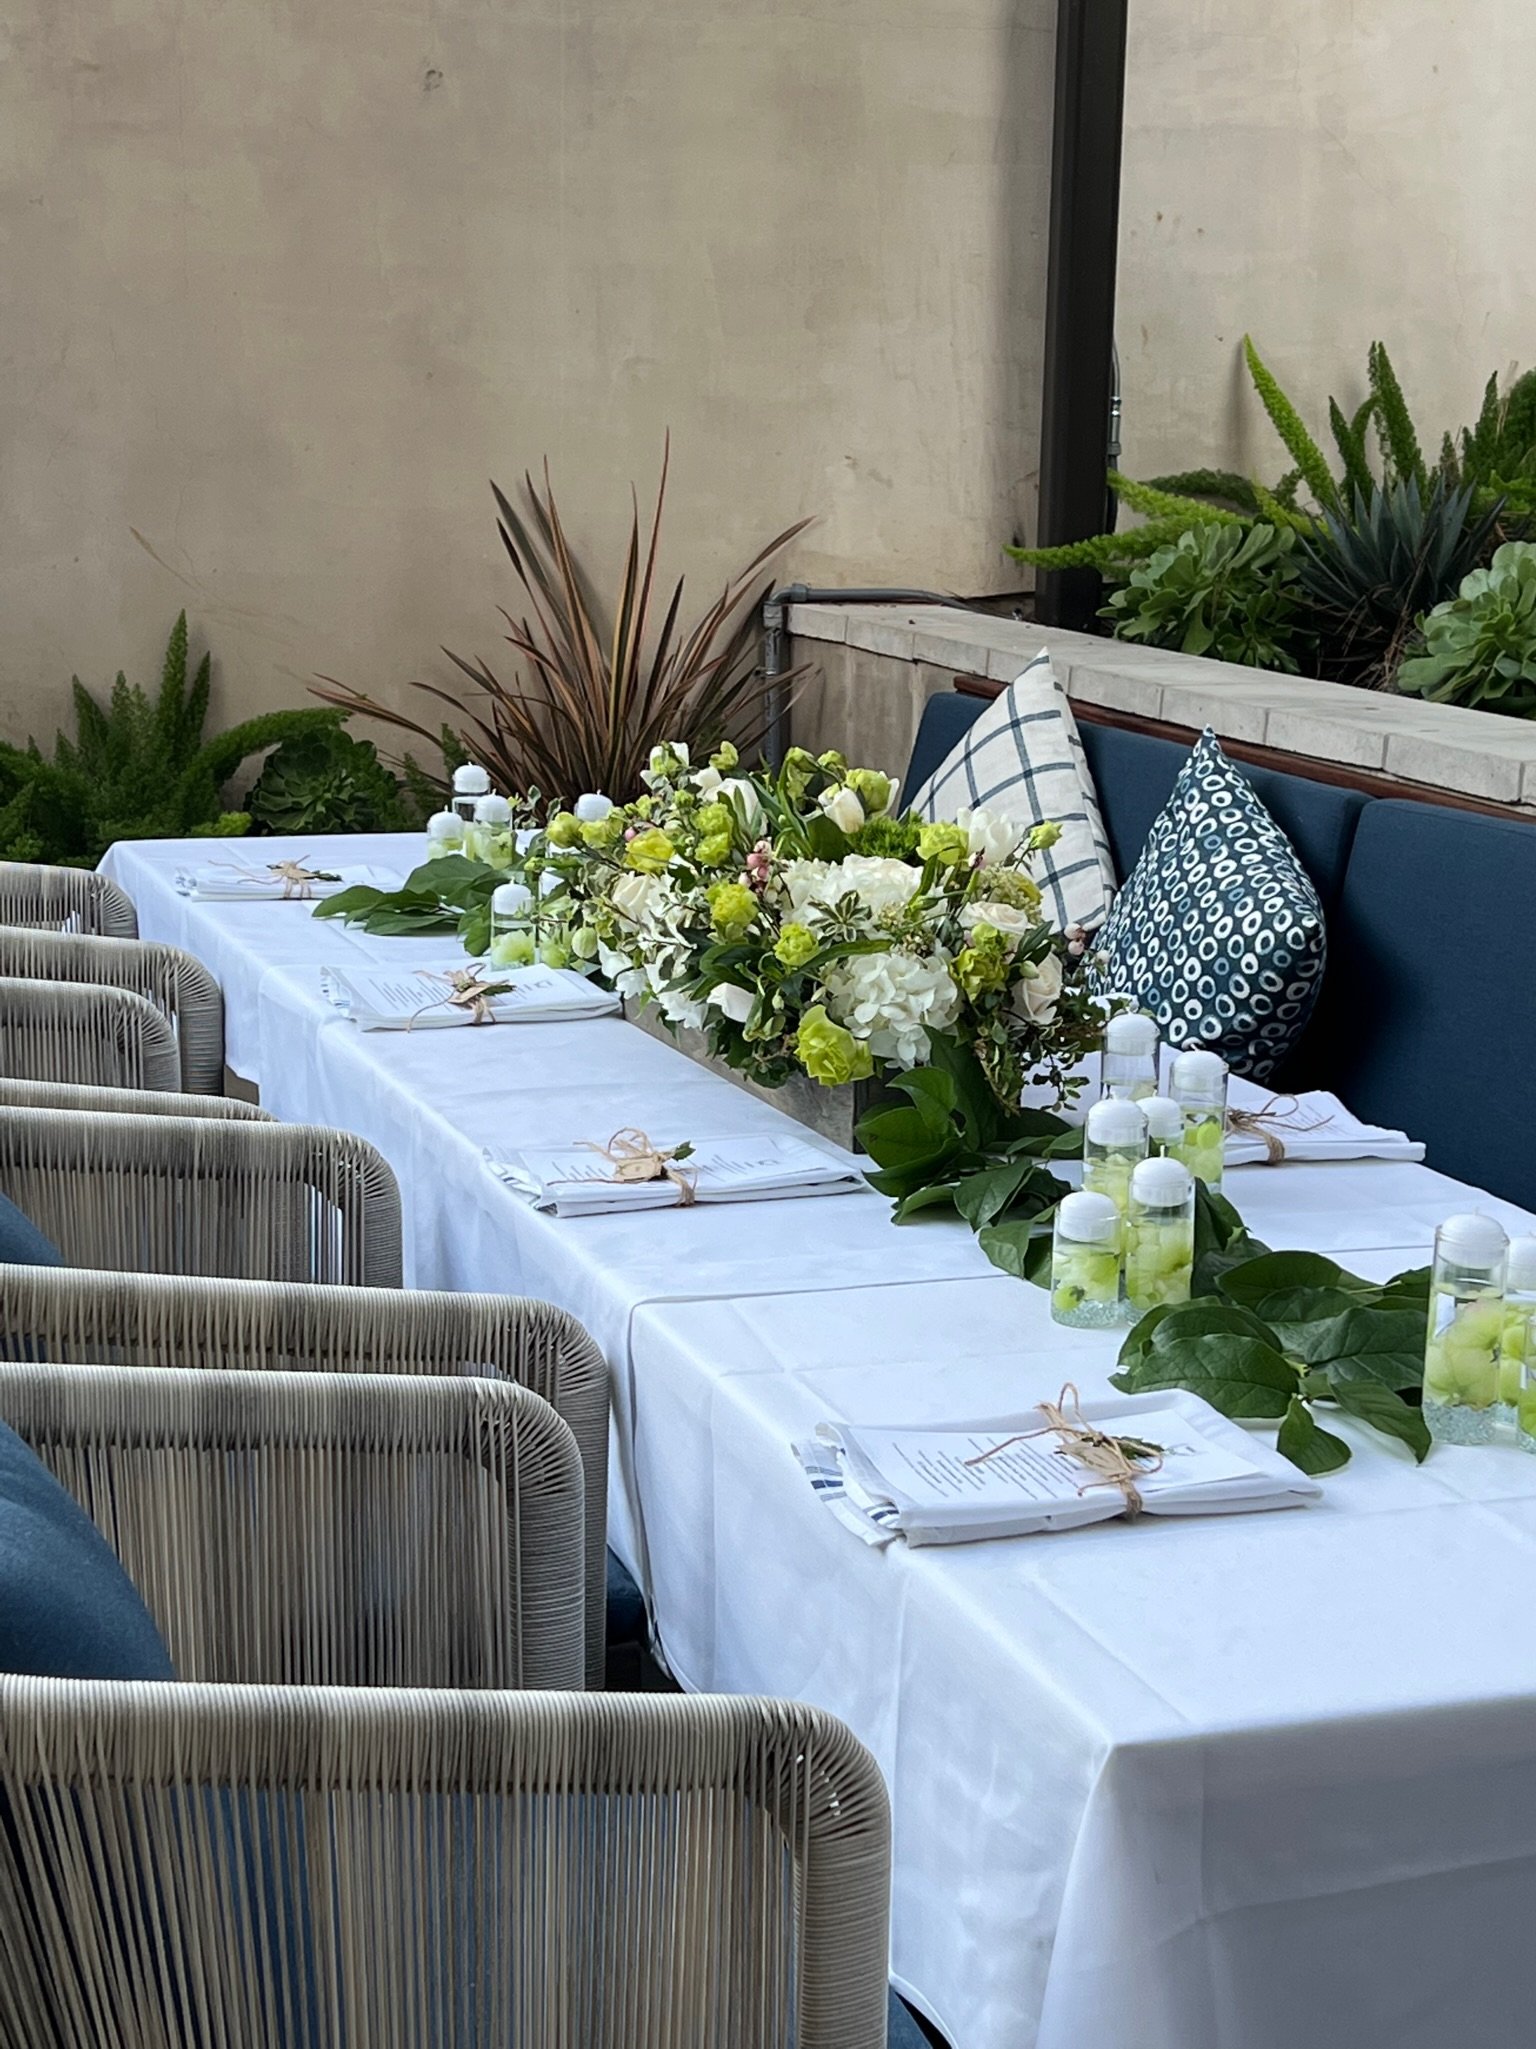 www.santabarbarawedding.com | Local Montecito | Santa Barbara Restaurant, Event Space, Rehearsal Dinner Spot with Full Service Bar